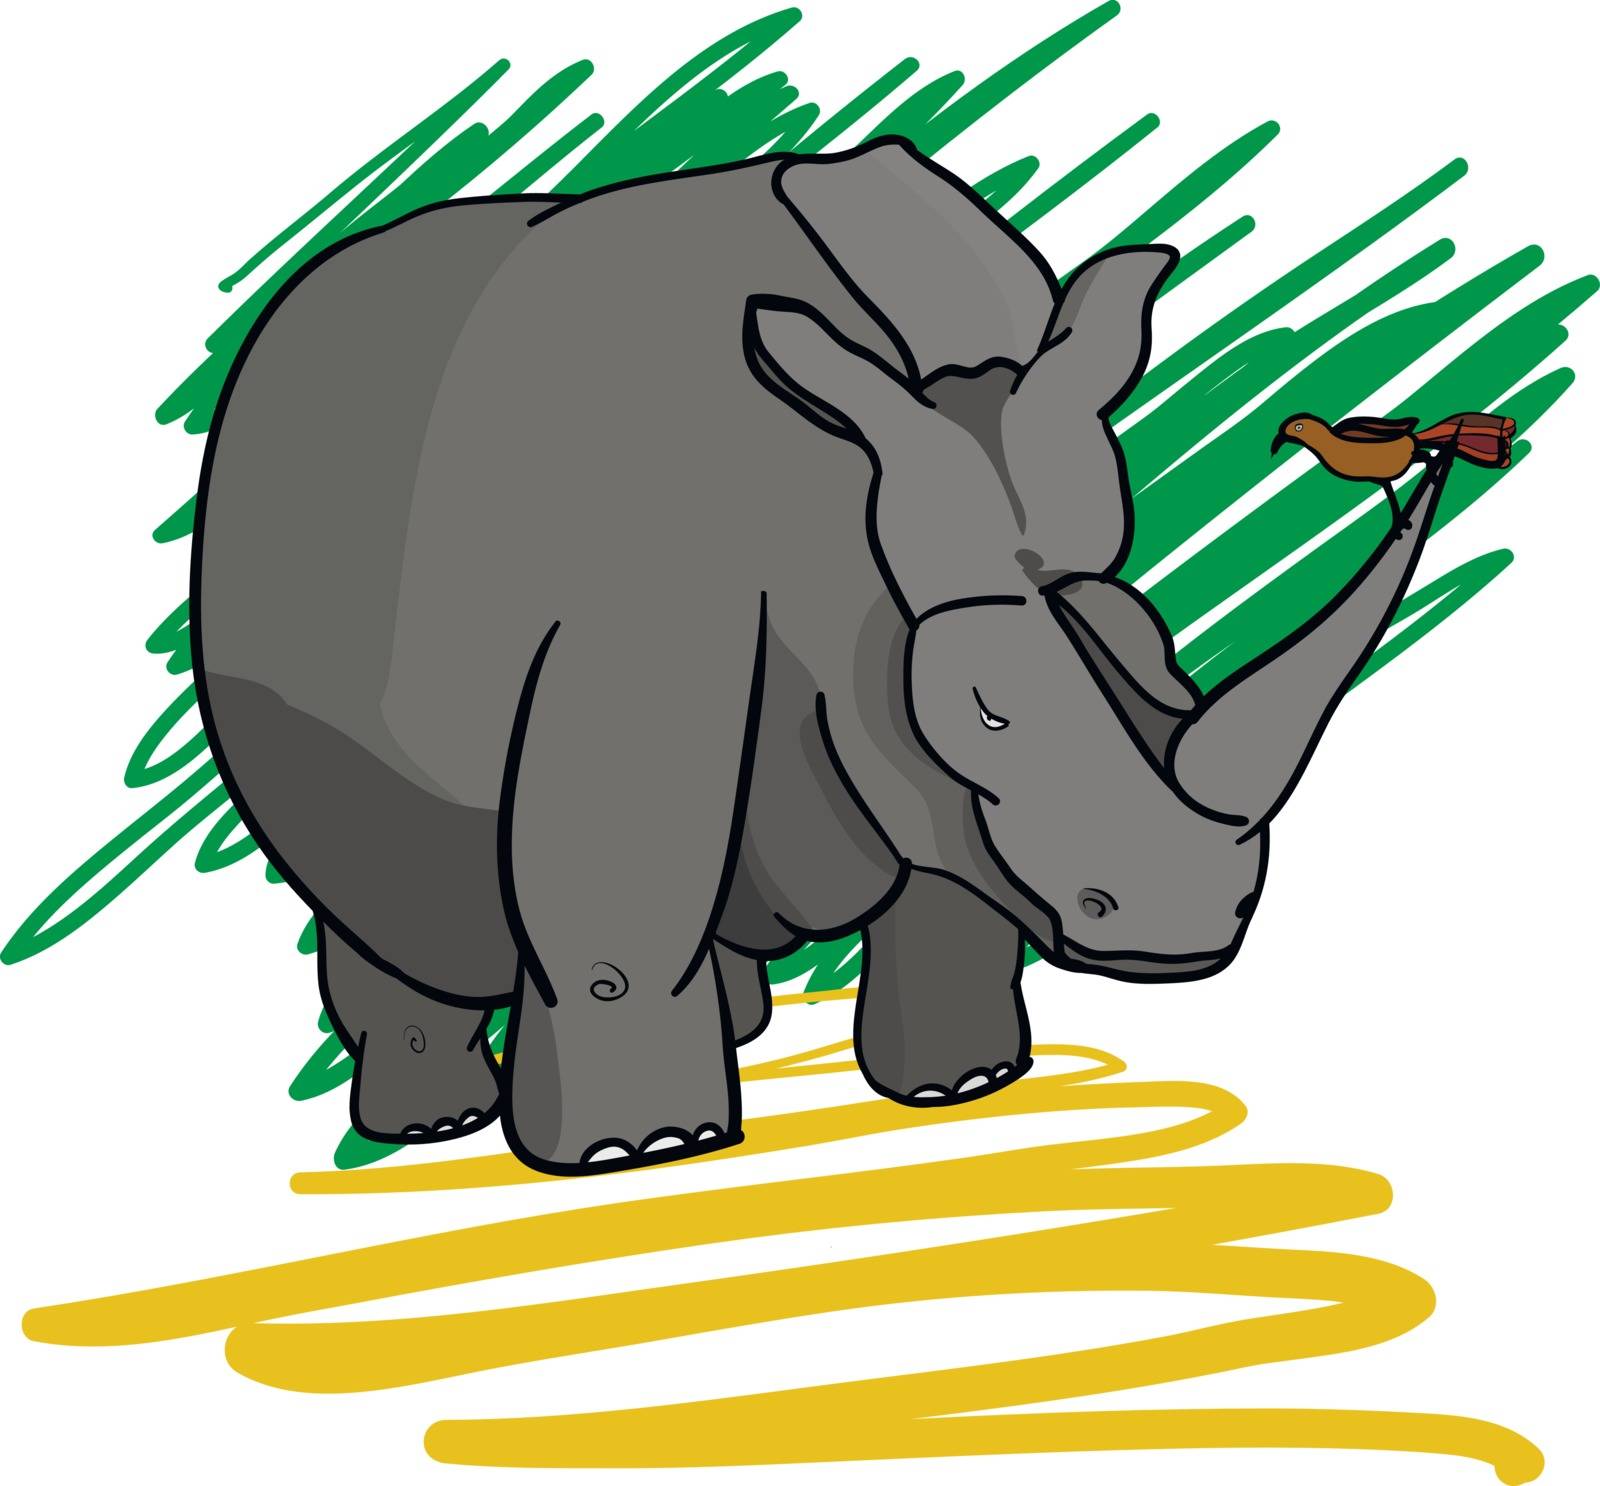 Rhino and bird hand drawn vector colorful illustration